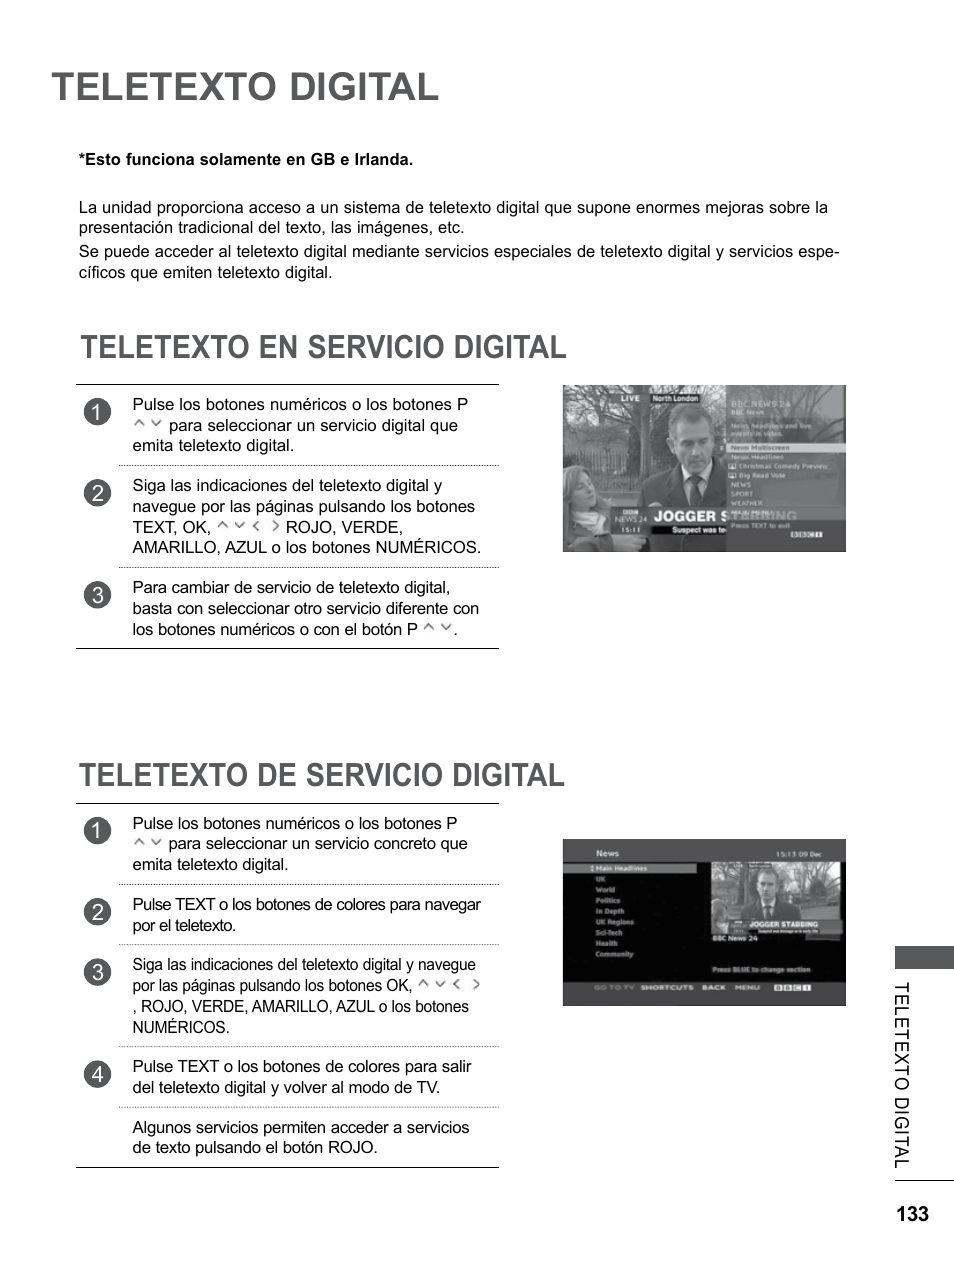 Teletexto digital, Teletexto en servicio digital, Teletexto de servicio digital | LG 55LE5300 Manual del usuario | Página 181 / 206